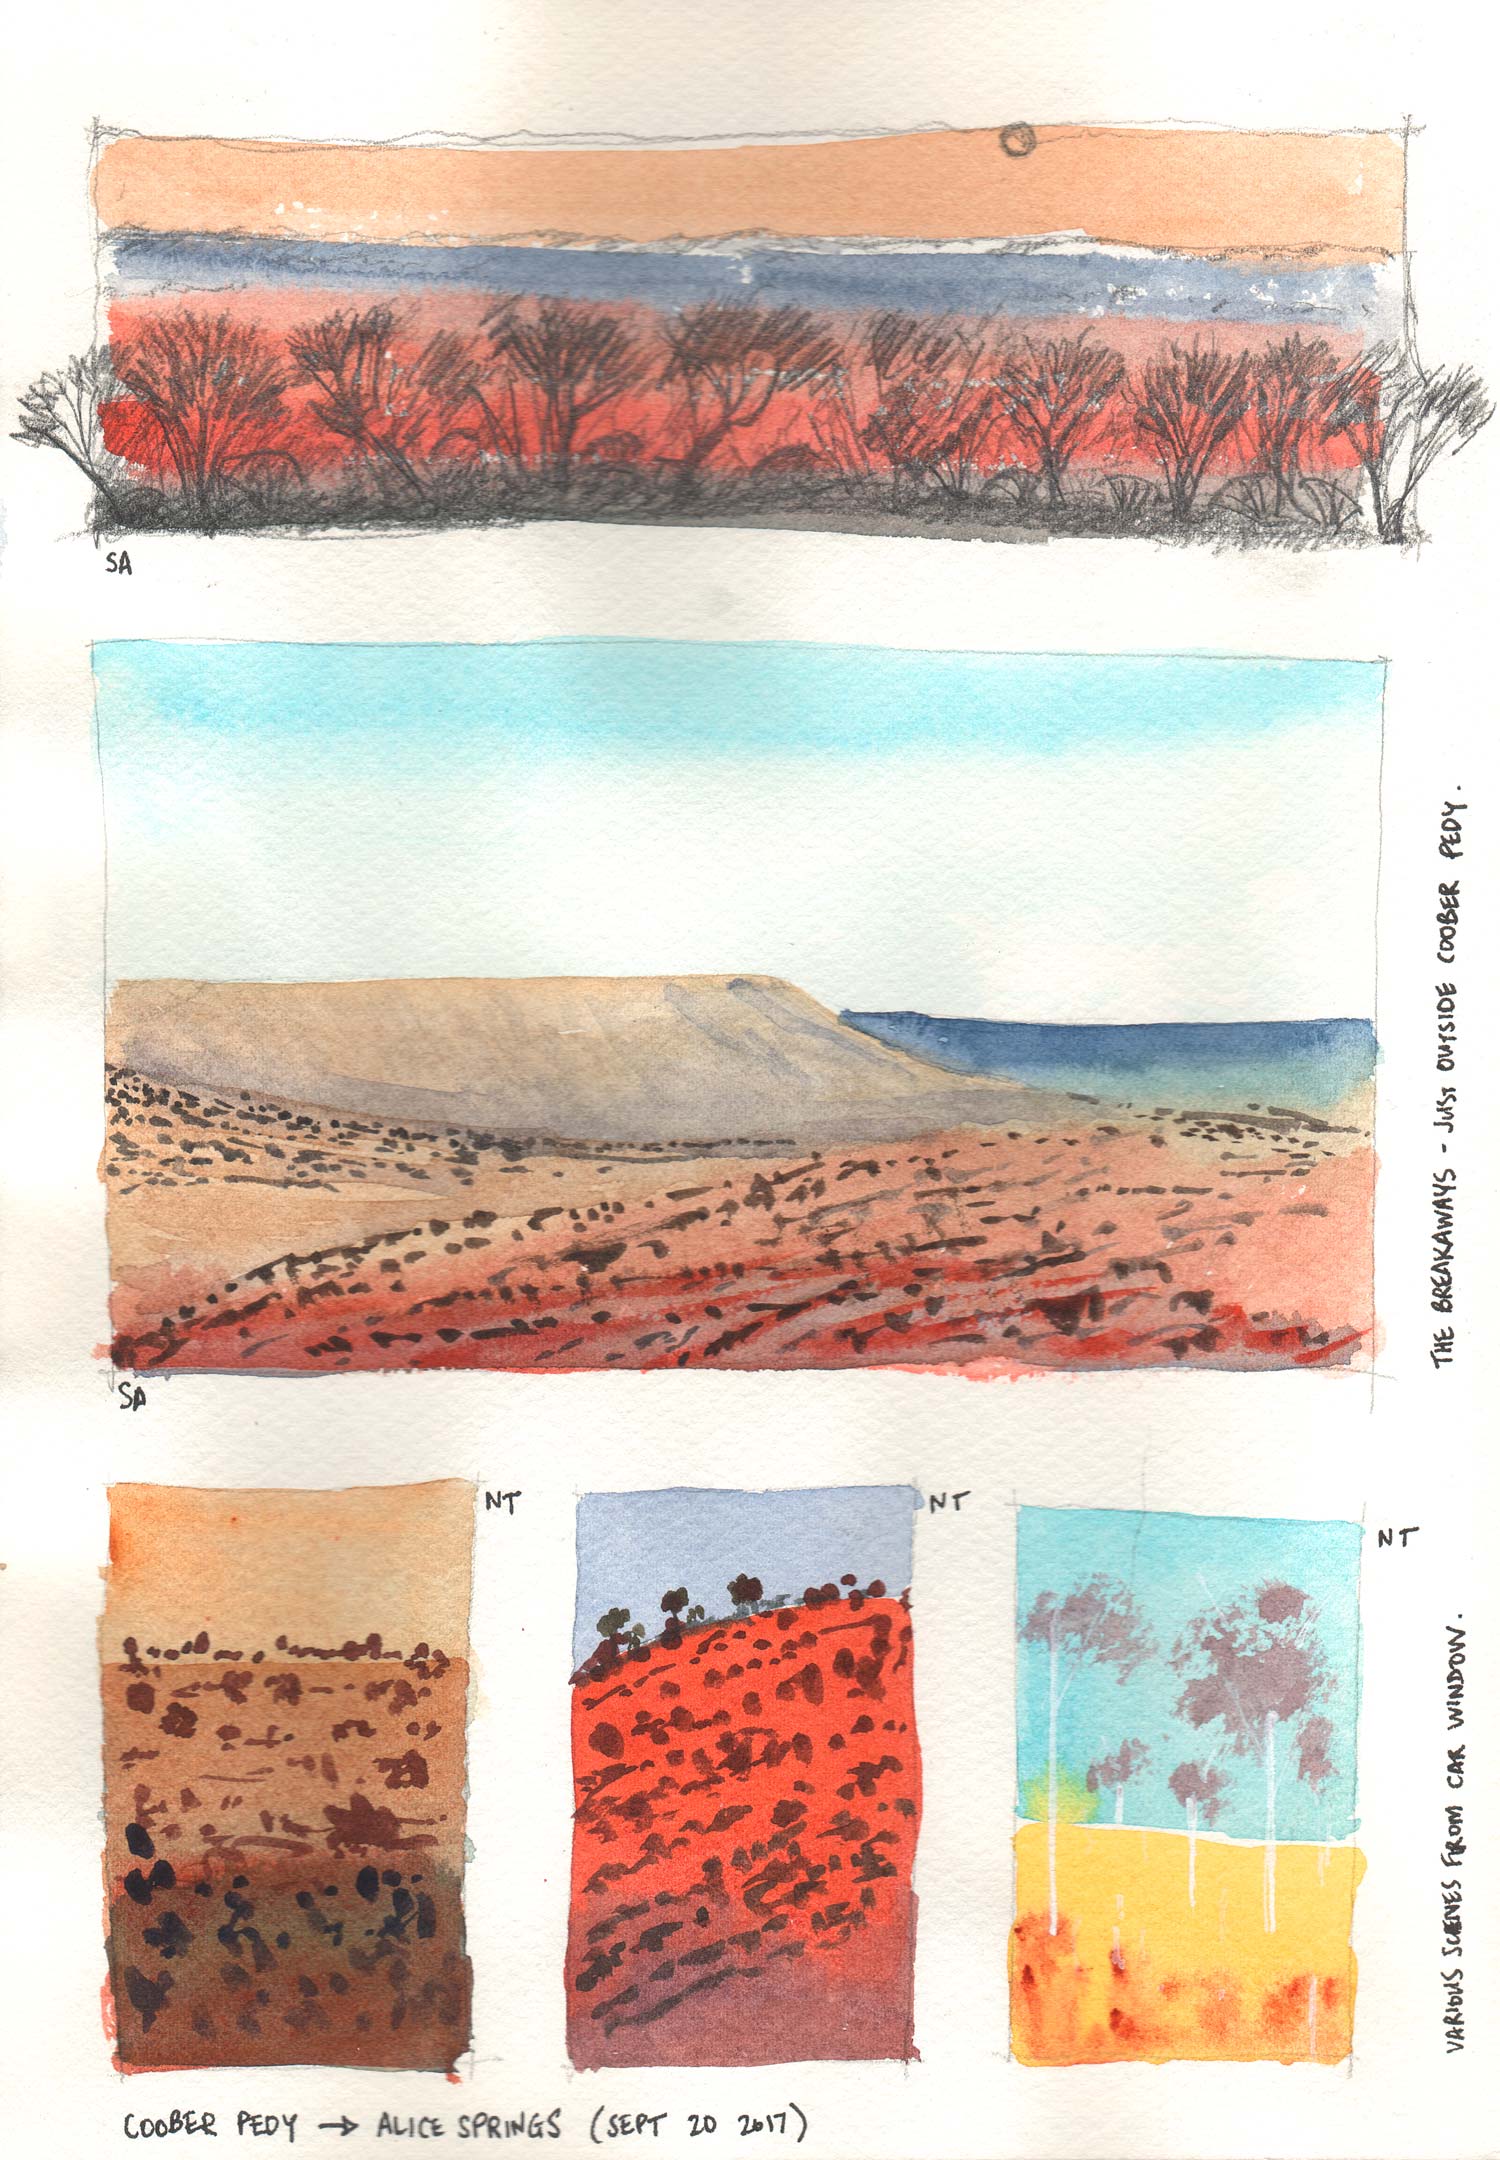 Thumbnail sketches of various landscapes